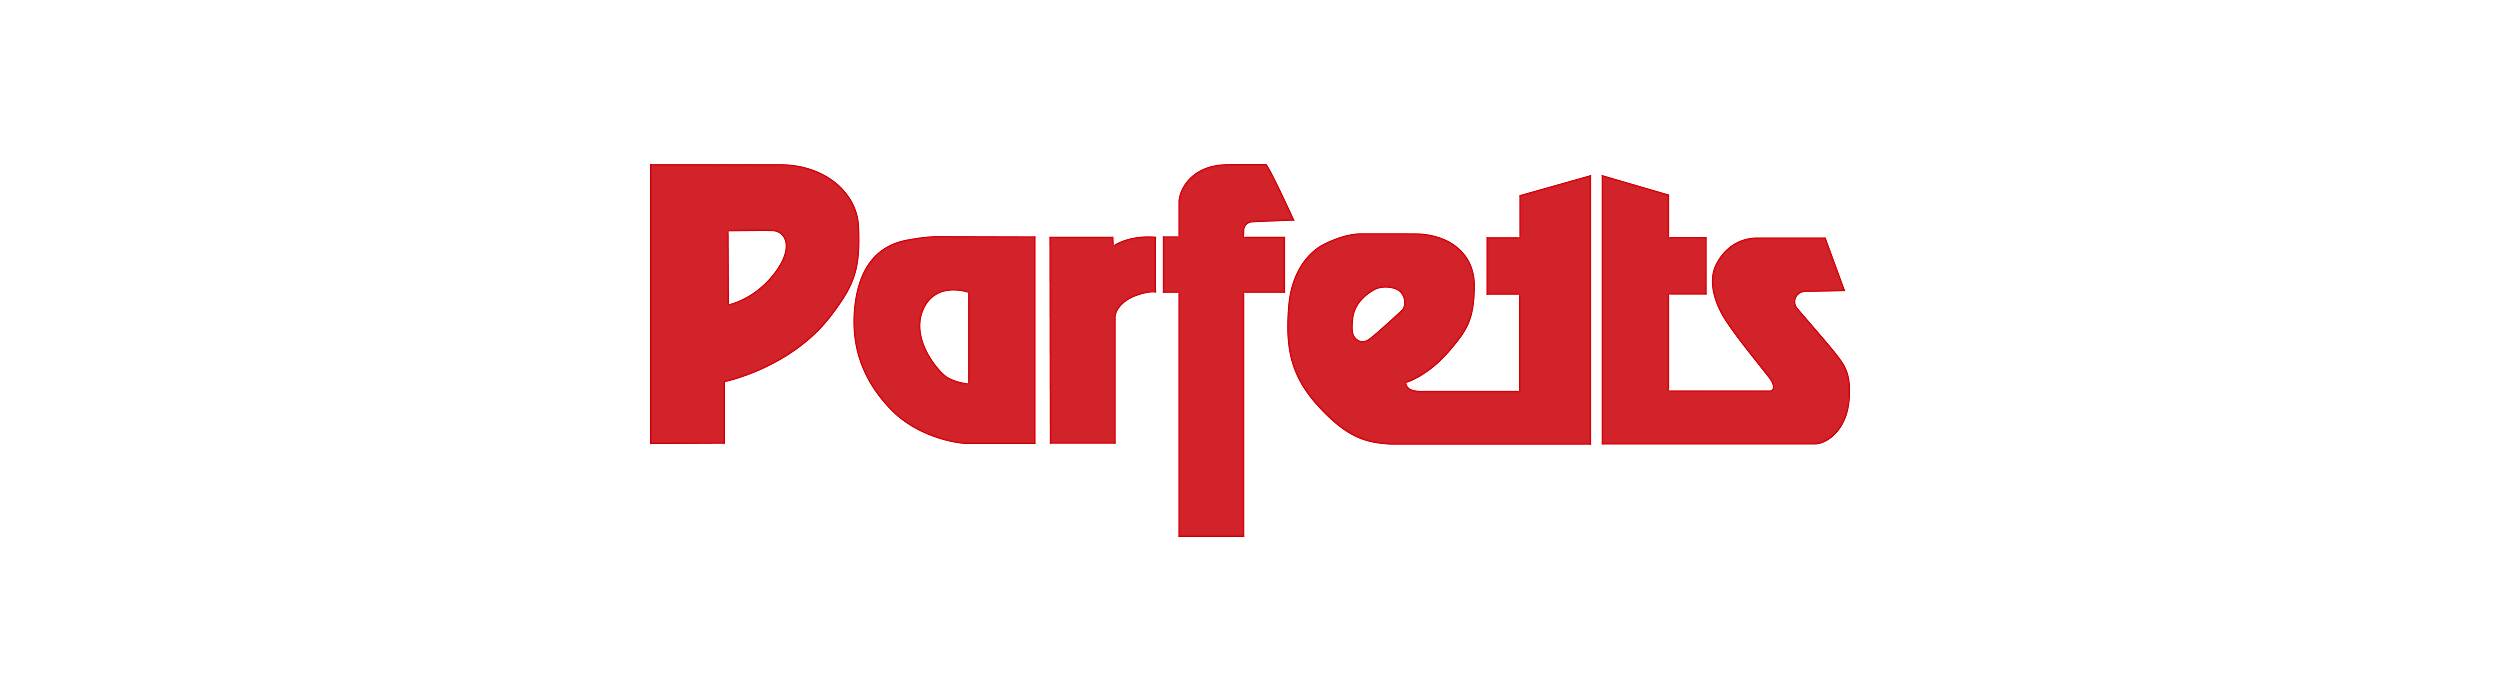 parfetts logo